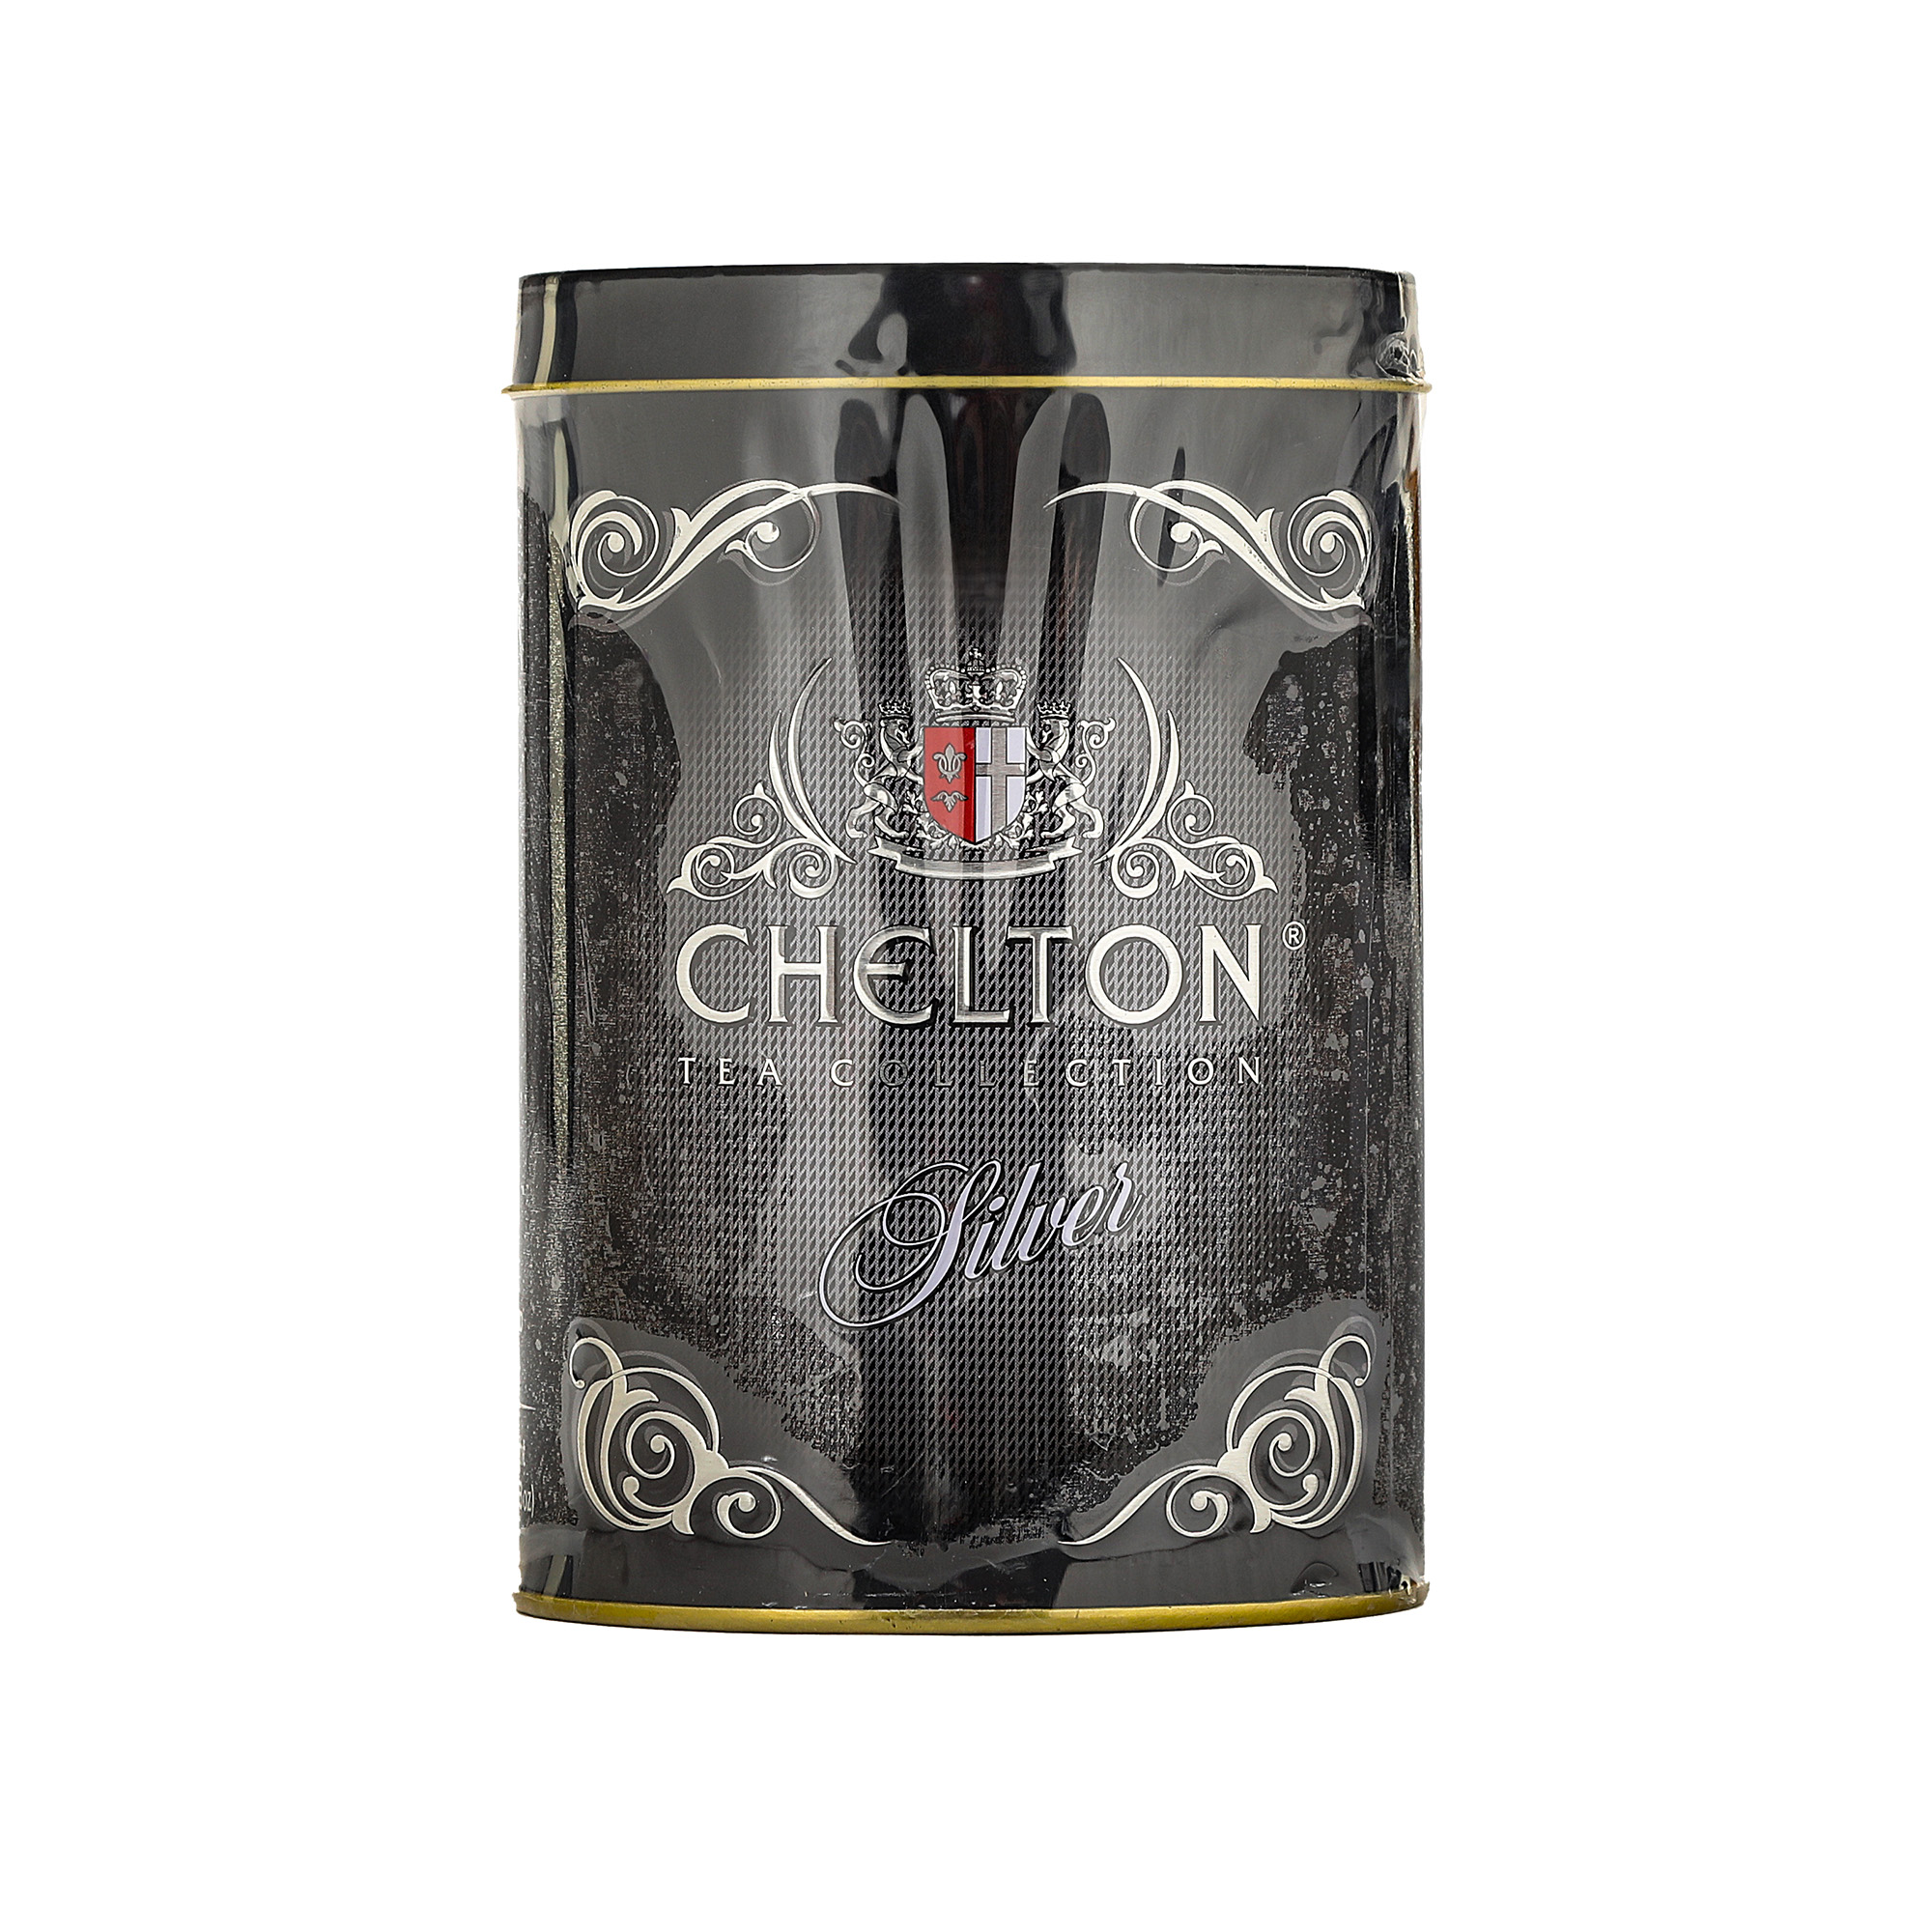 Чай Chelton Отборный среднелистовой, 100 г чай chelton музыкальная шкатулка танго 100 г жестяная банка